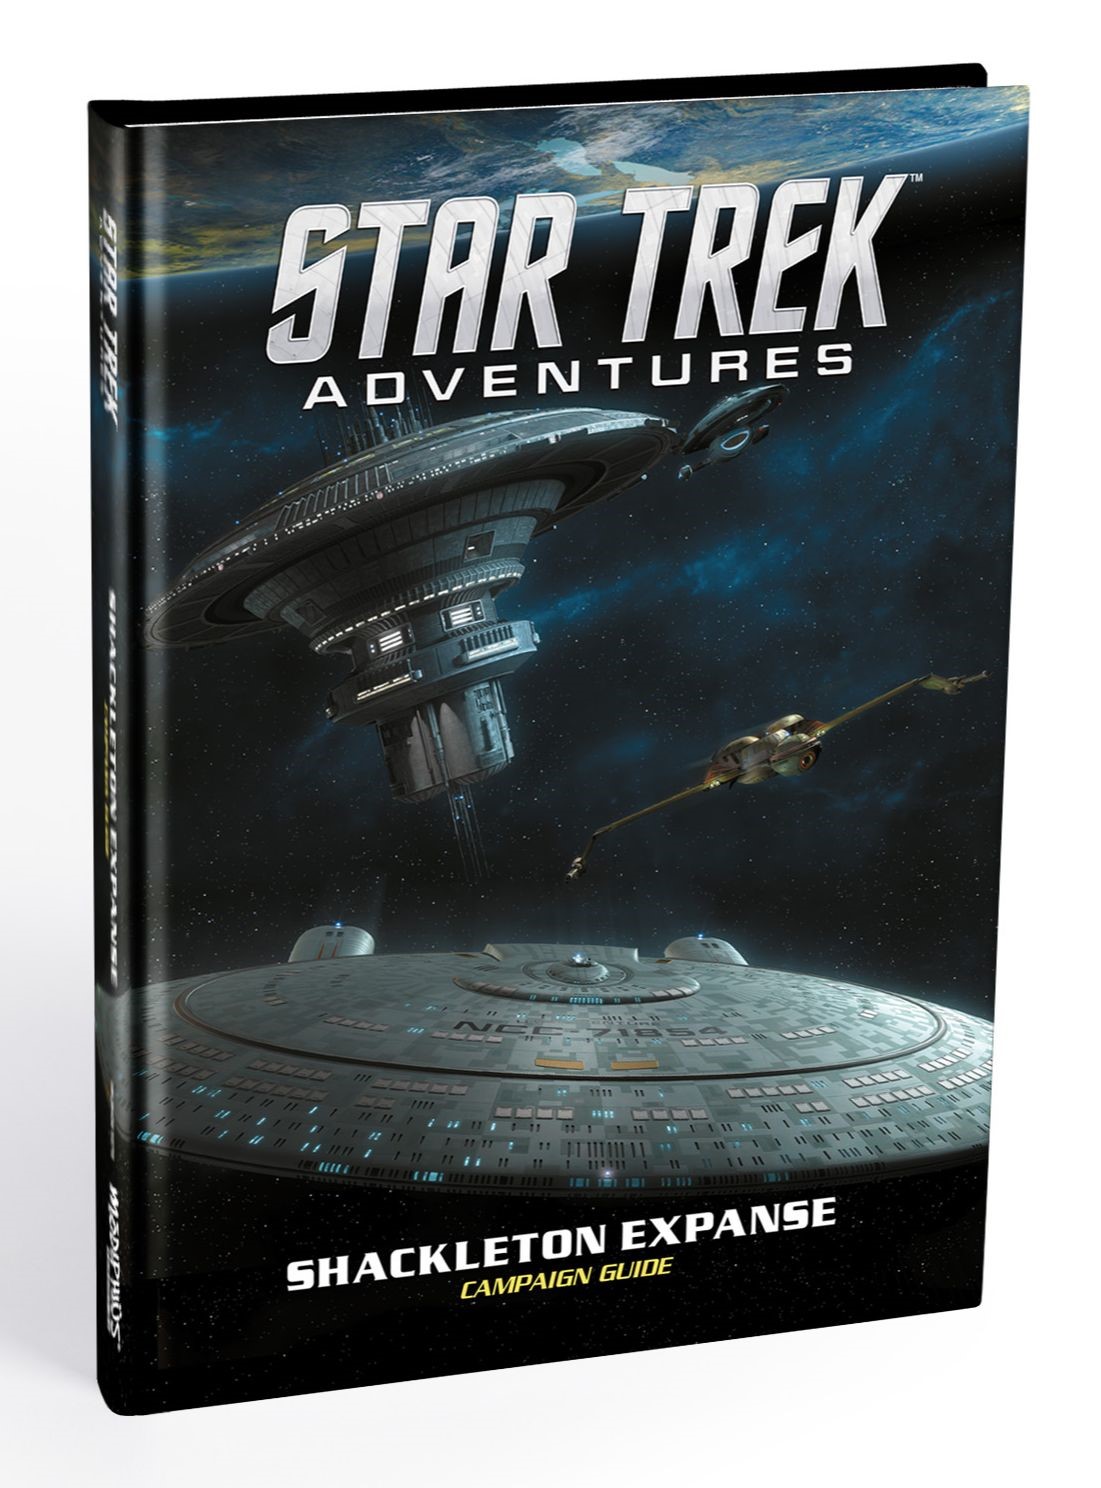 Star Trek Adventures: Shackleton Expanse Campaign Guide 